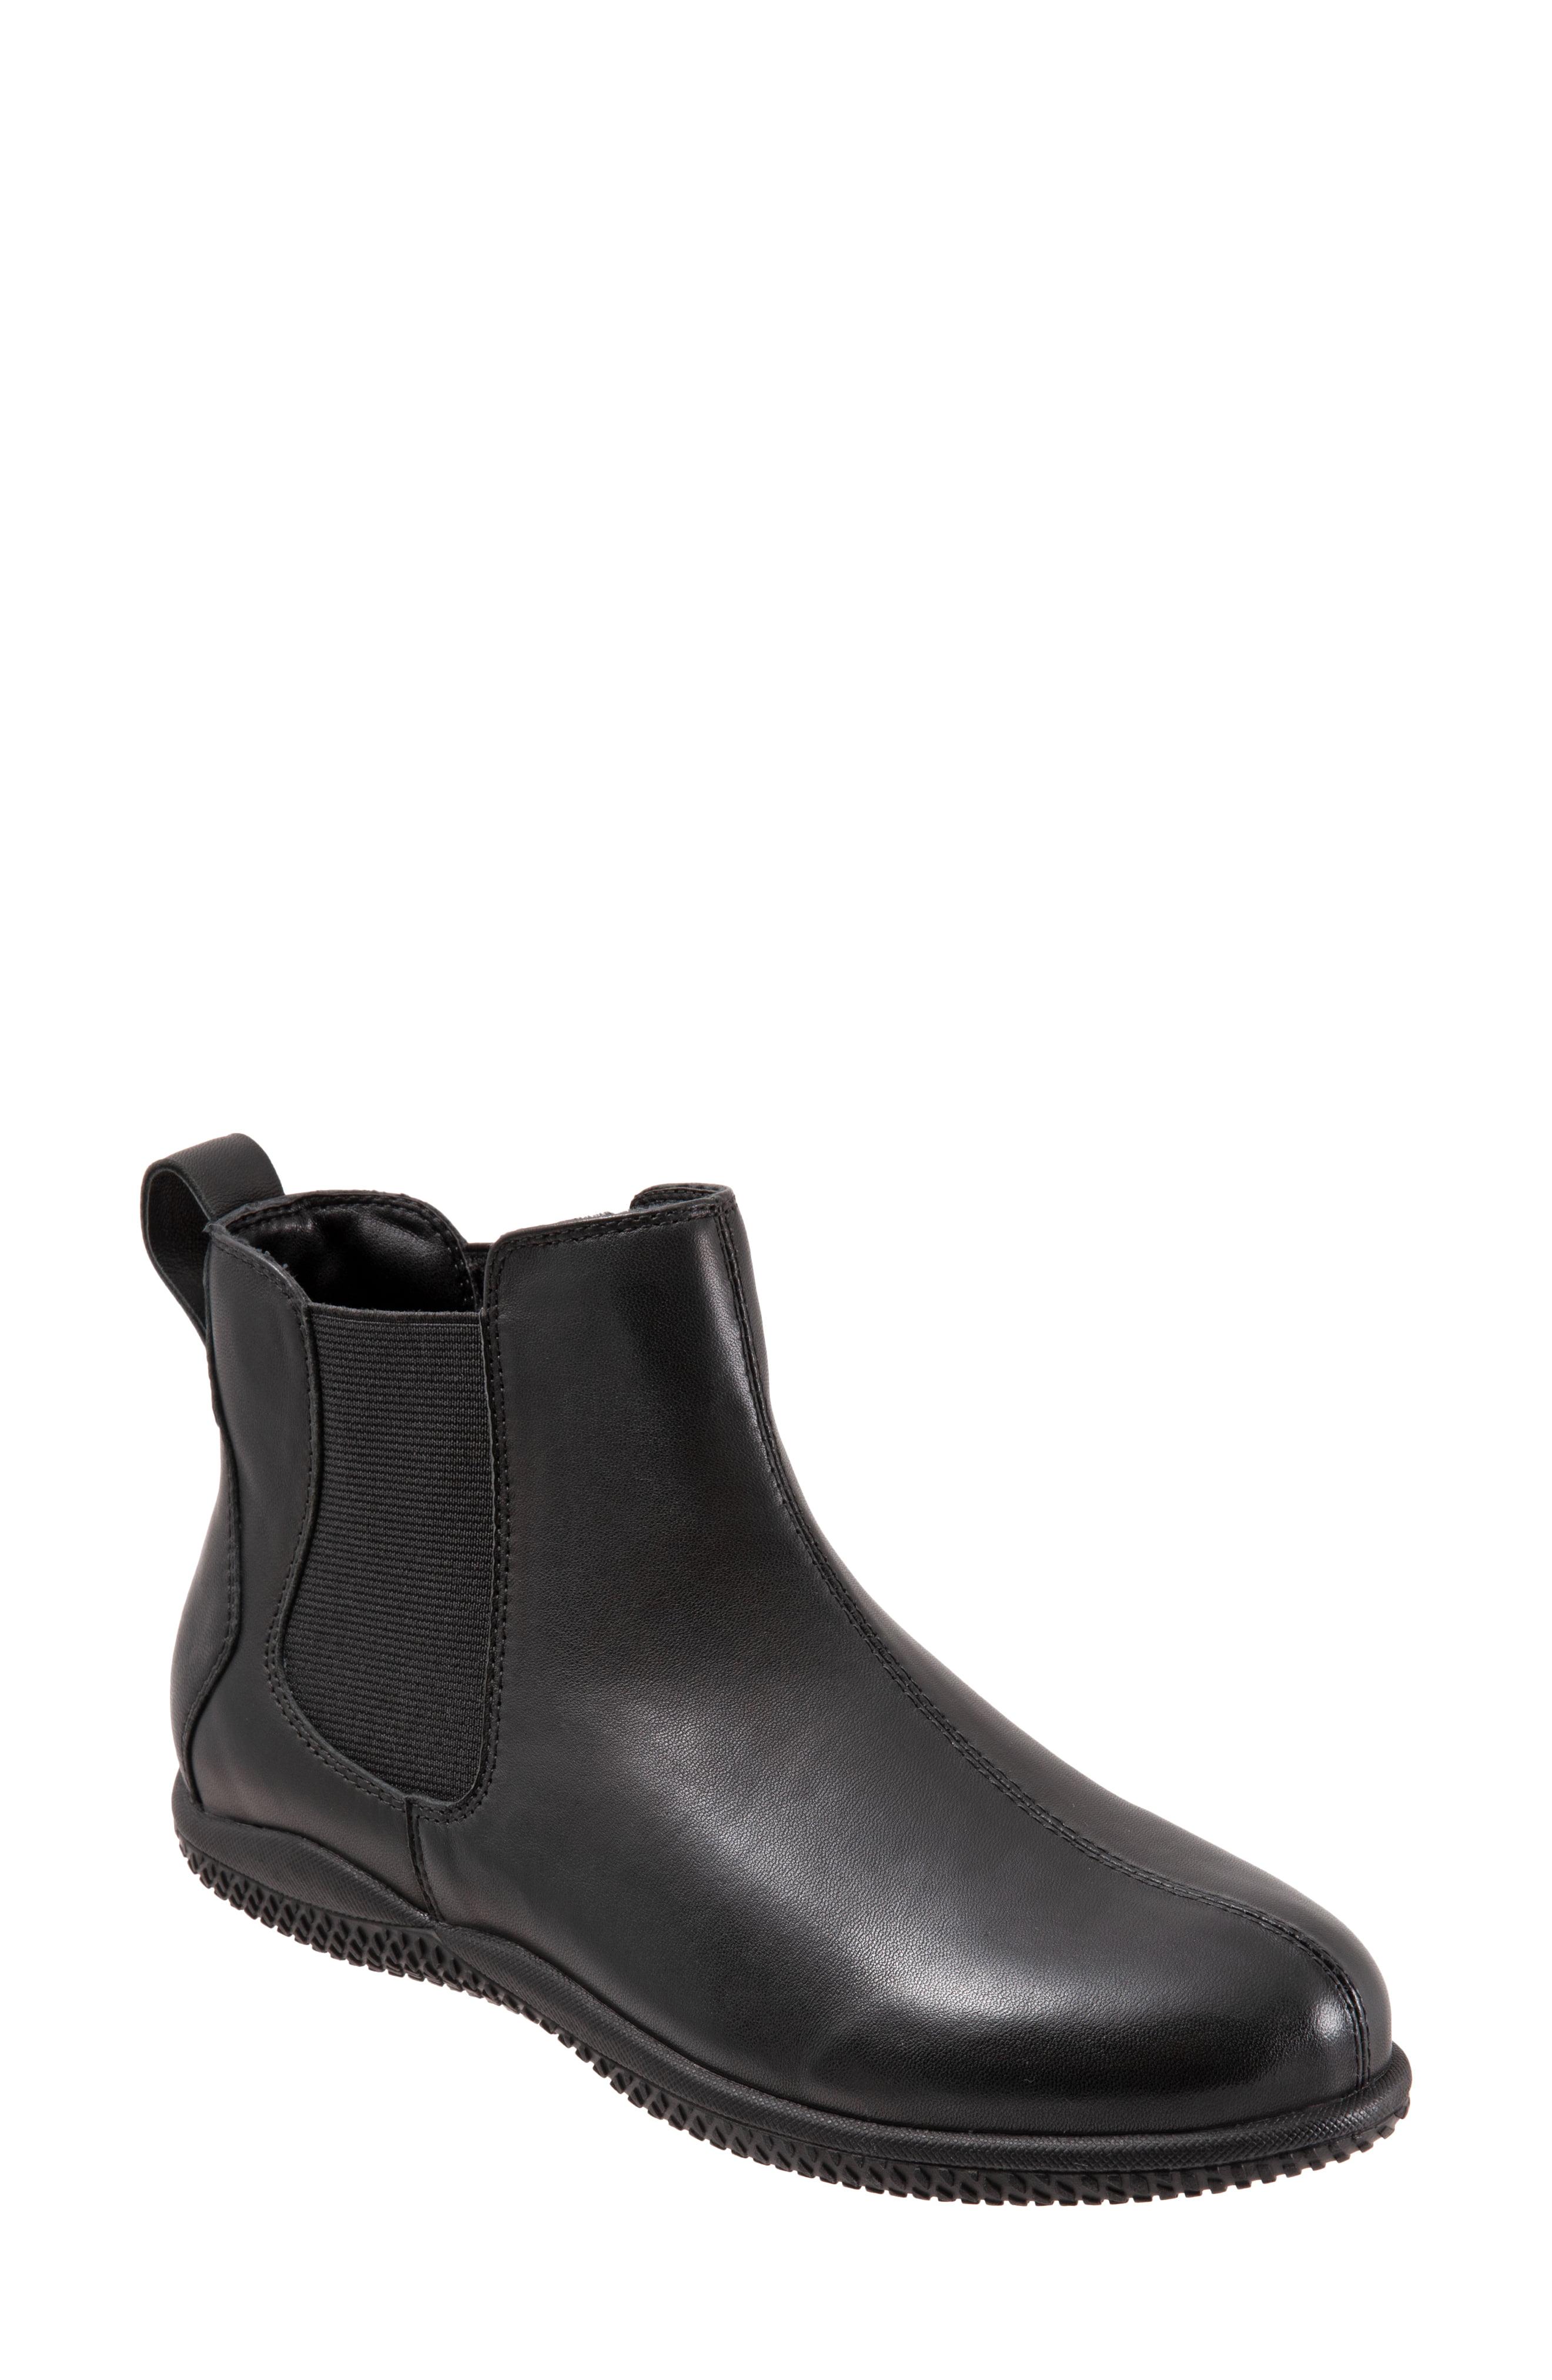 Softwalk Softwalk Highland Chelsea Boot in Black Leather (Black) - Lyst